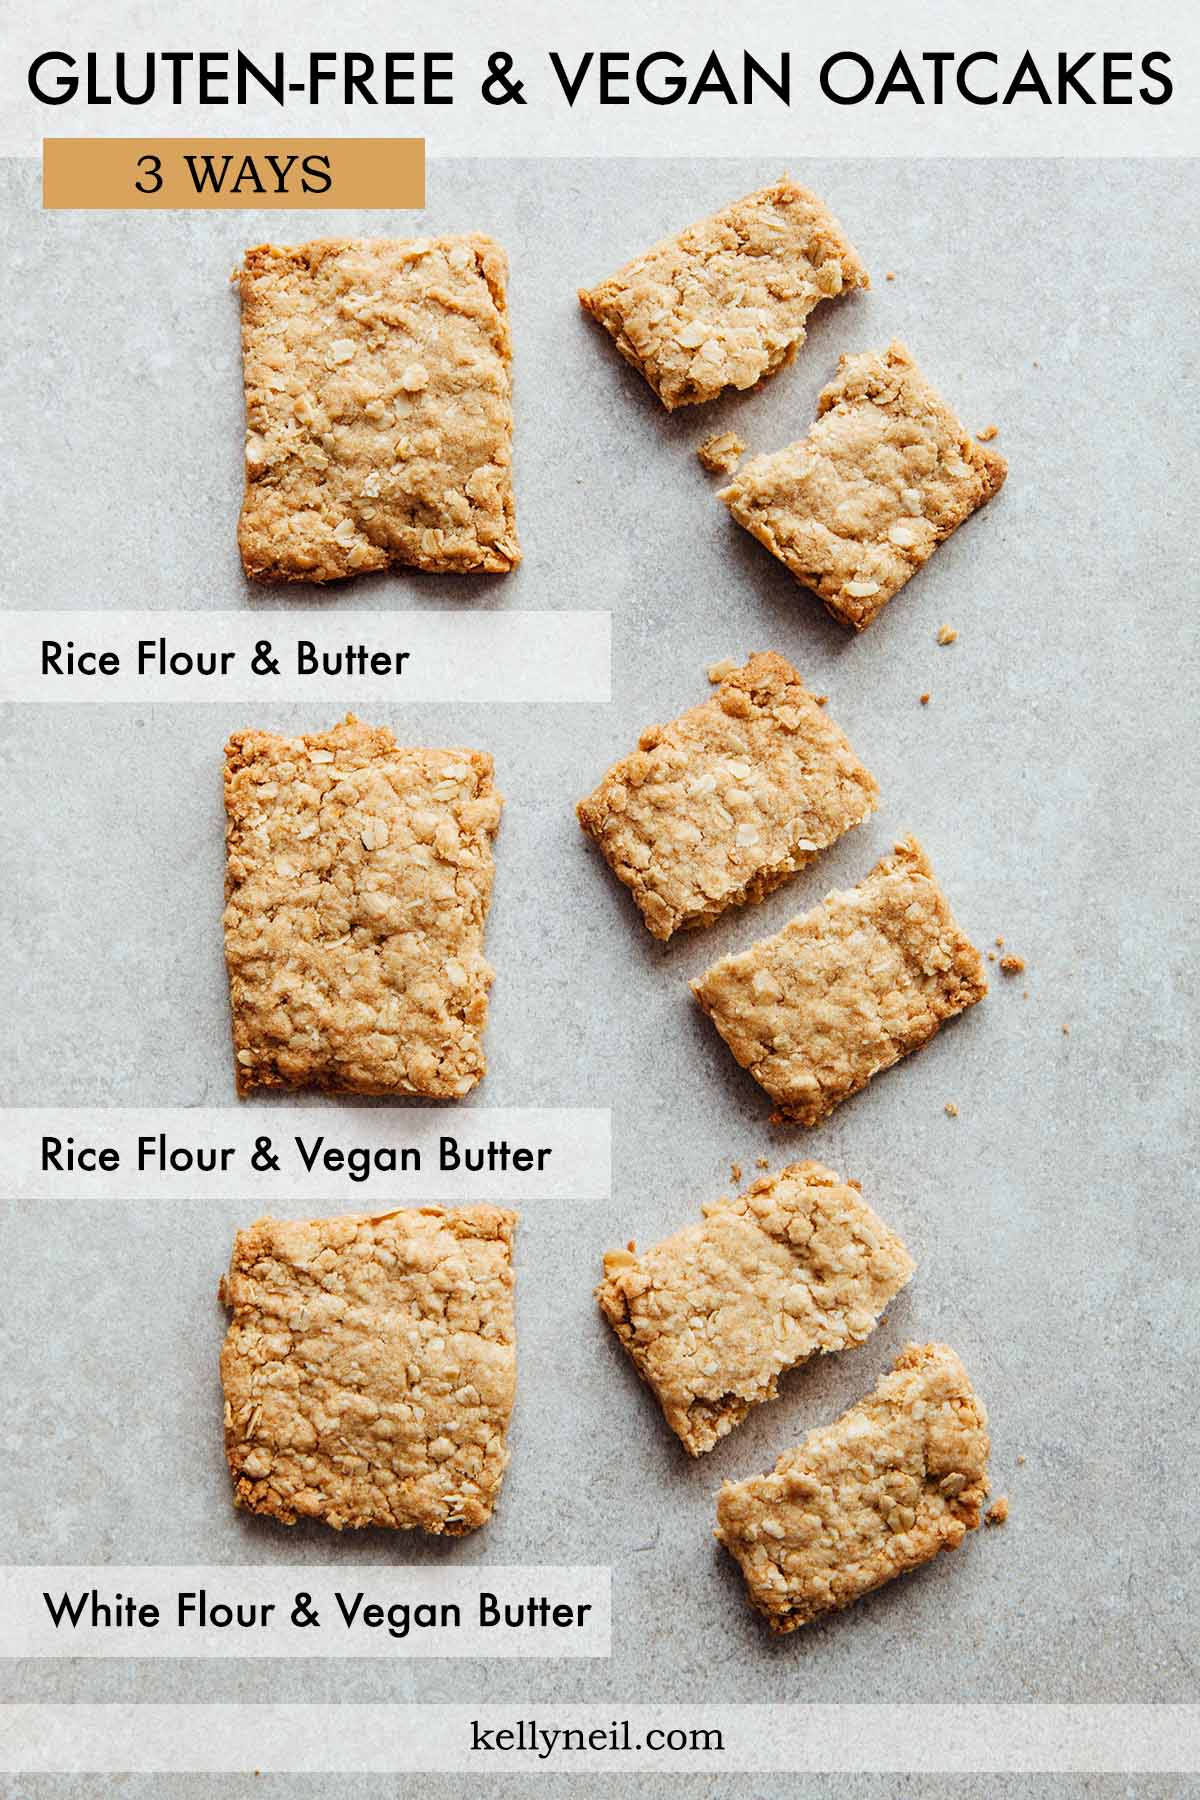 Three versions of vegan and gluten-free oatcakes.